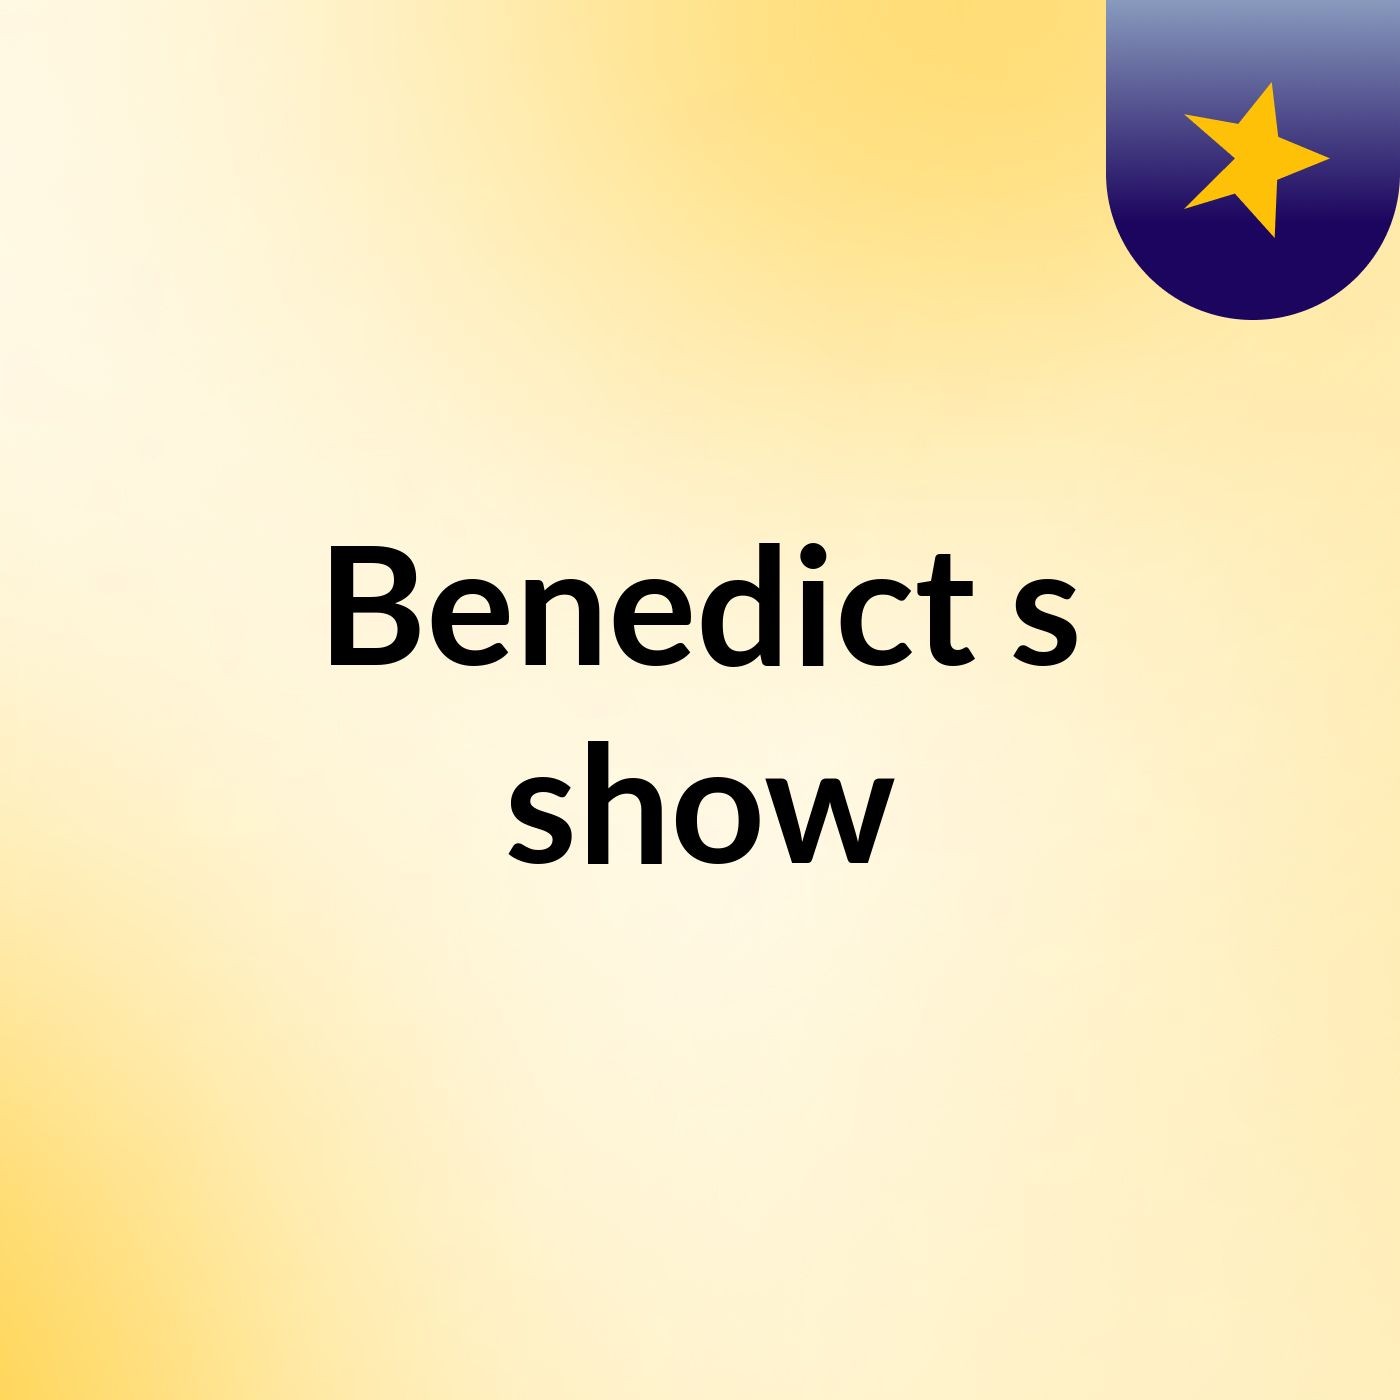 Benedict's show